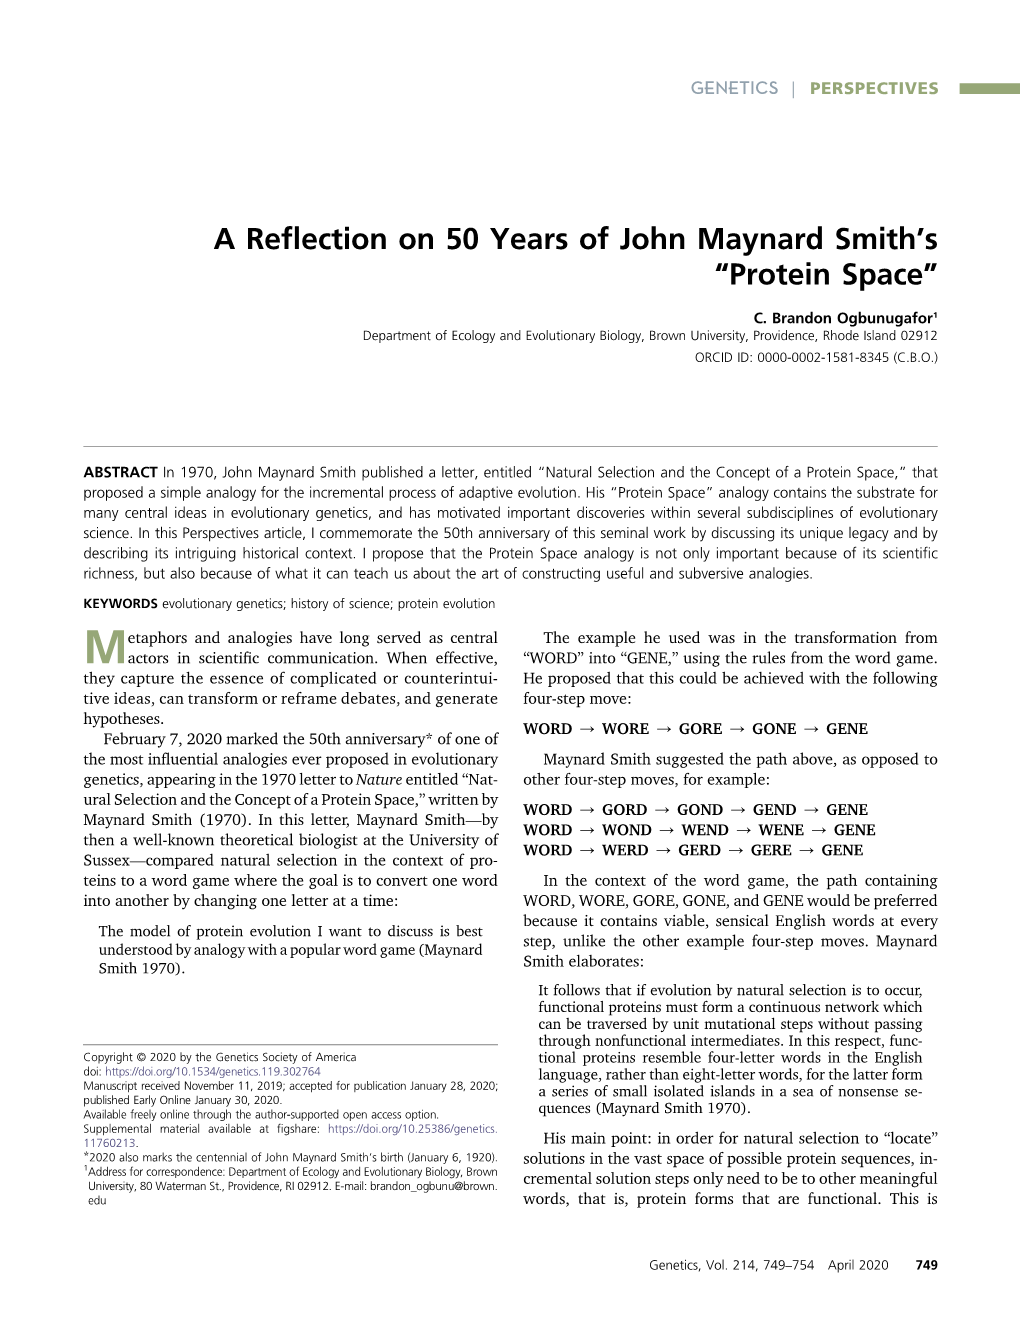 A Reflection on 50 Years of John Maynard Smith's